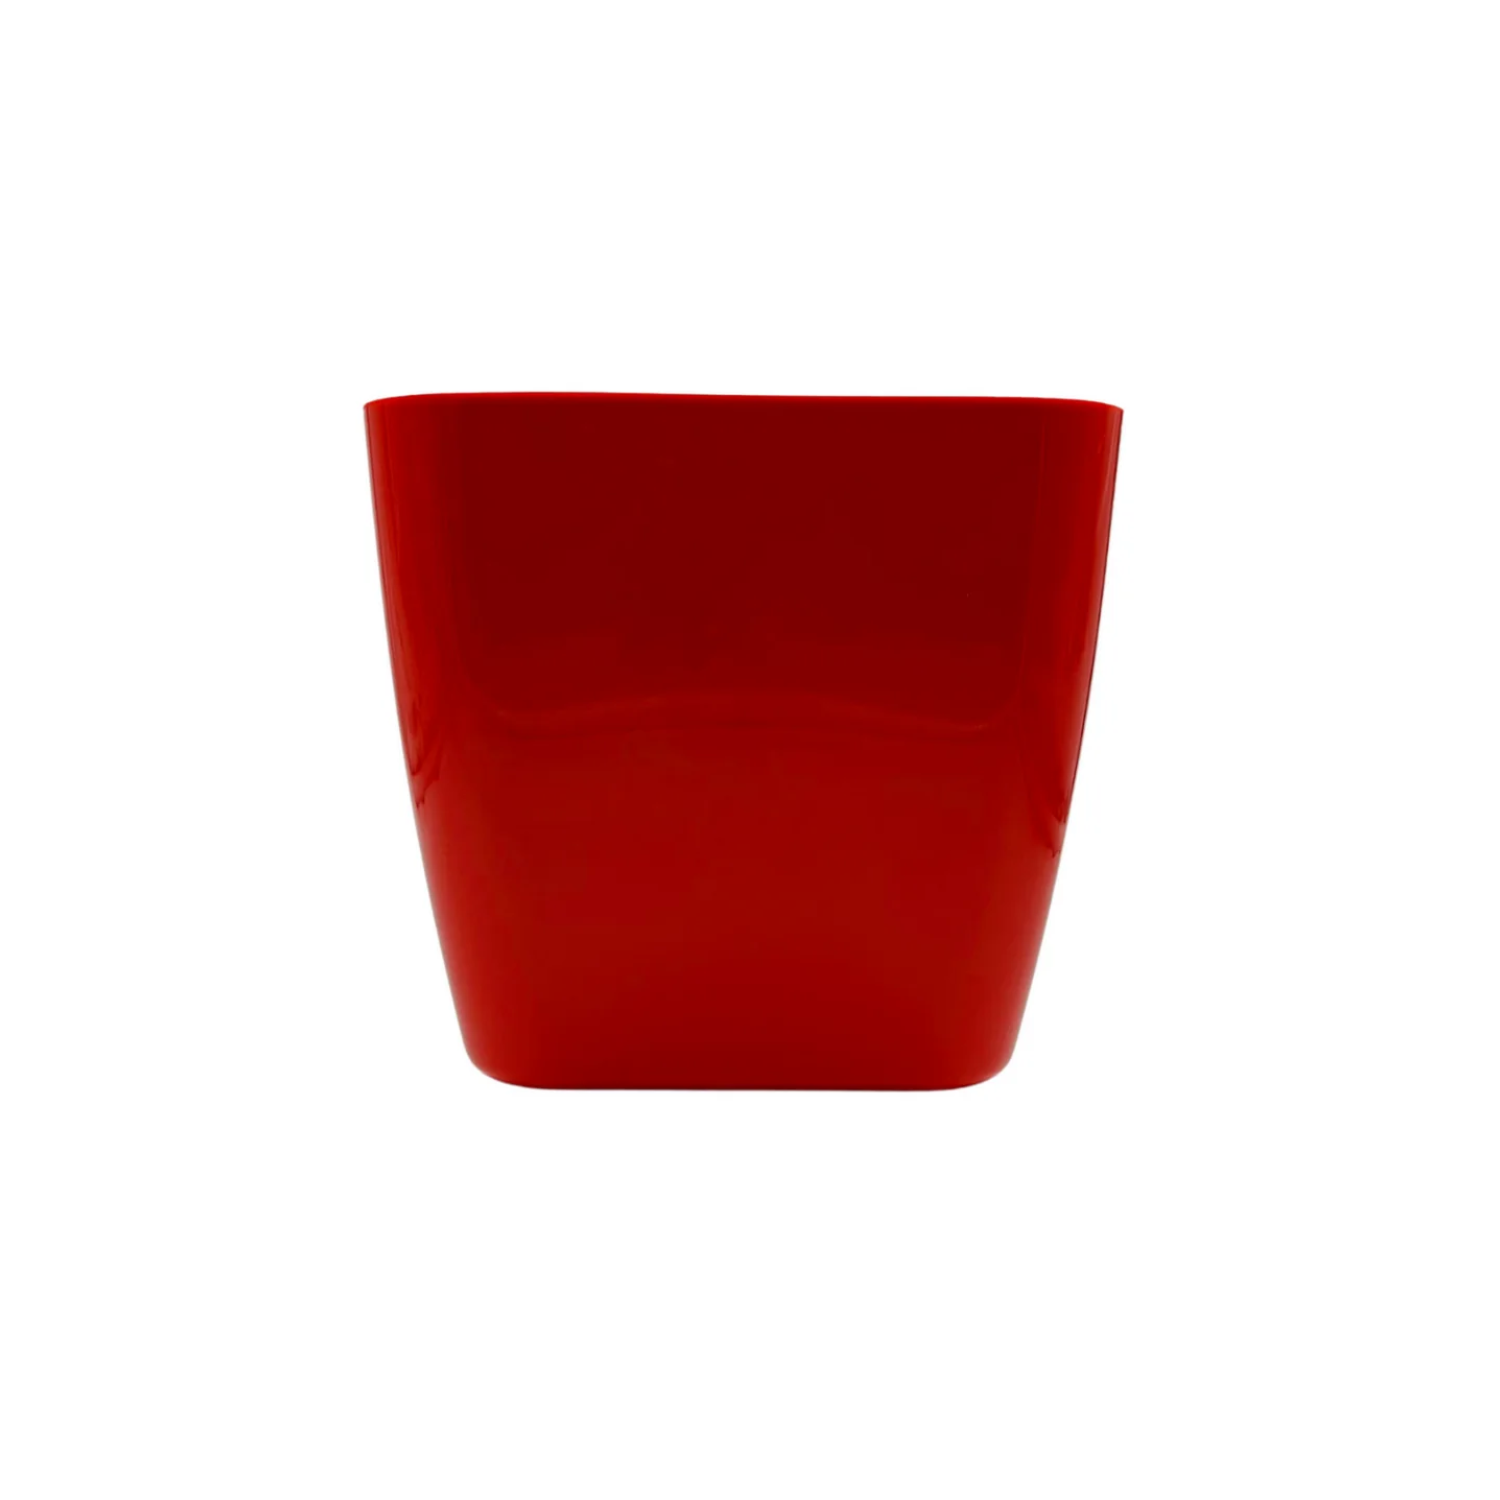 Siena 17cm Square Plastic Pot